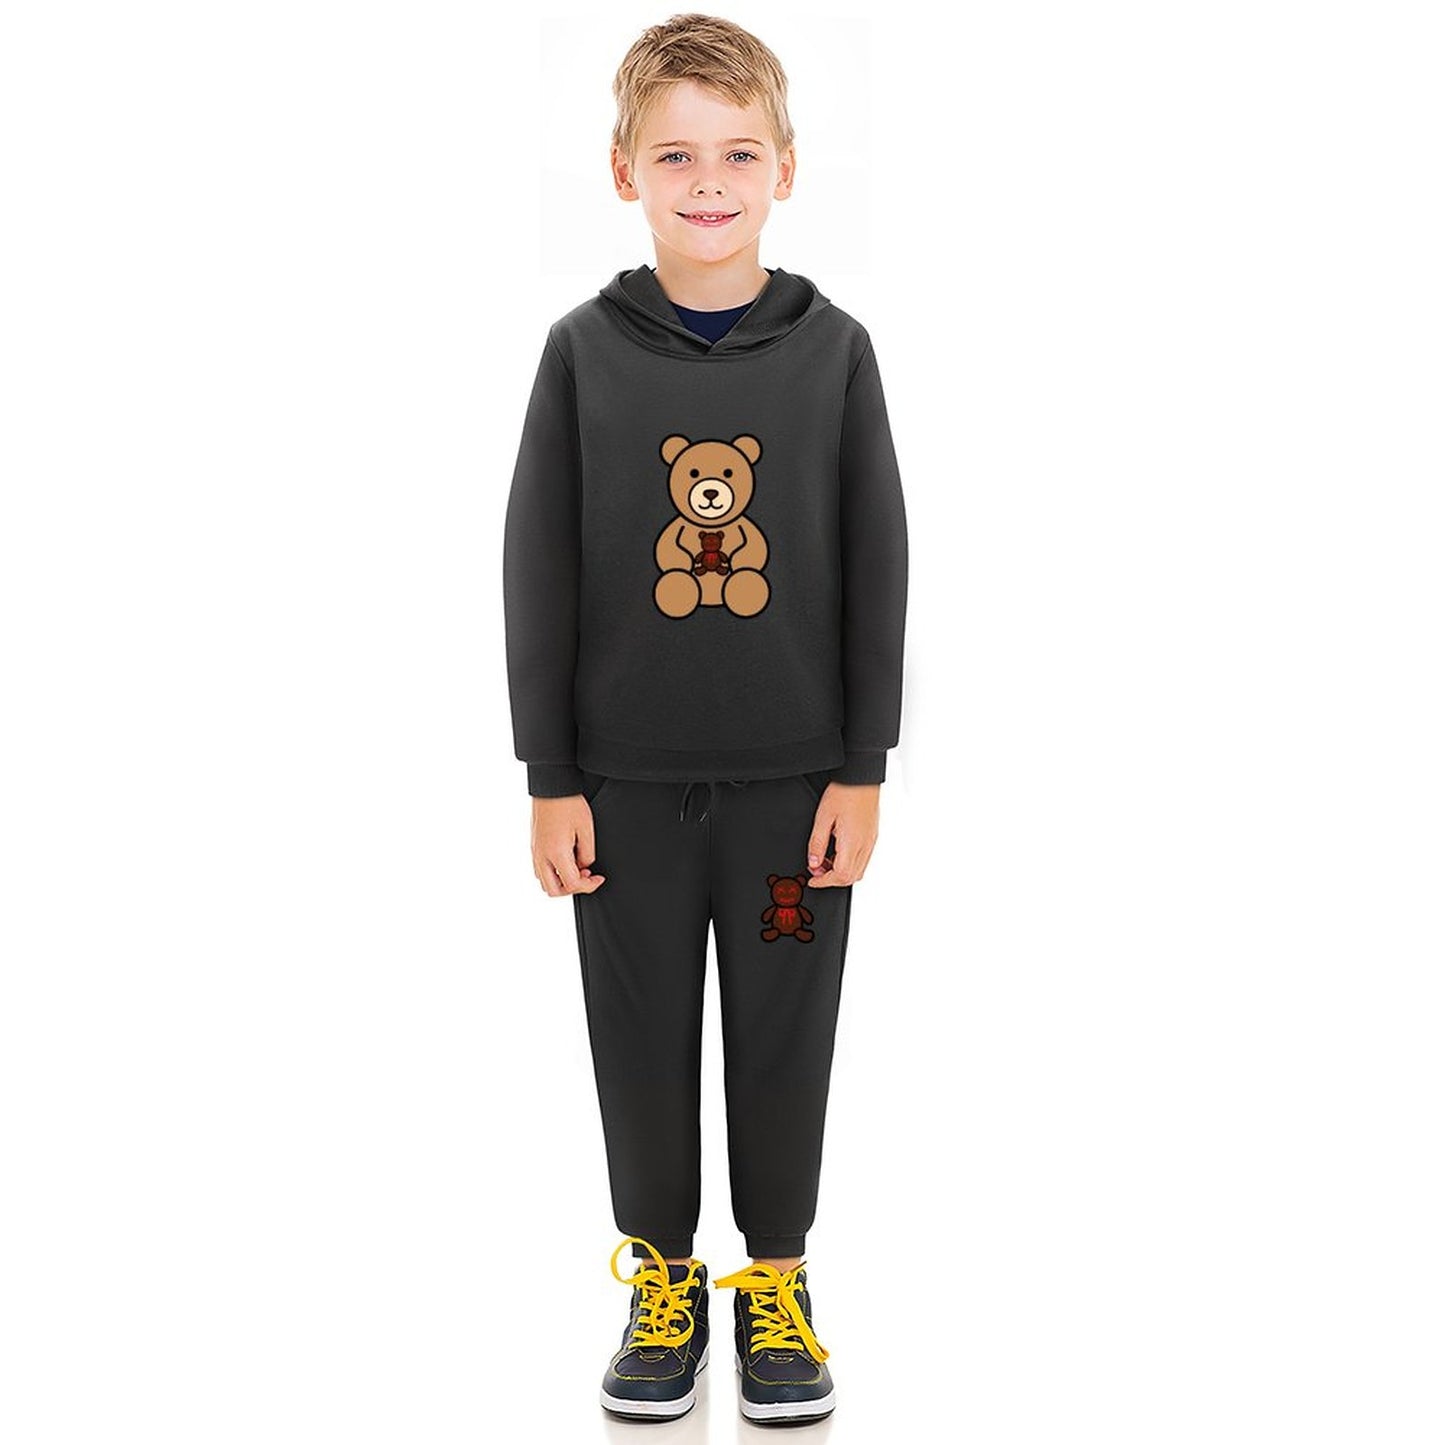 Online Customize Youth Hoodie Set Three Little Teddy Bear Teddy Bears